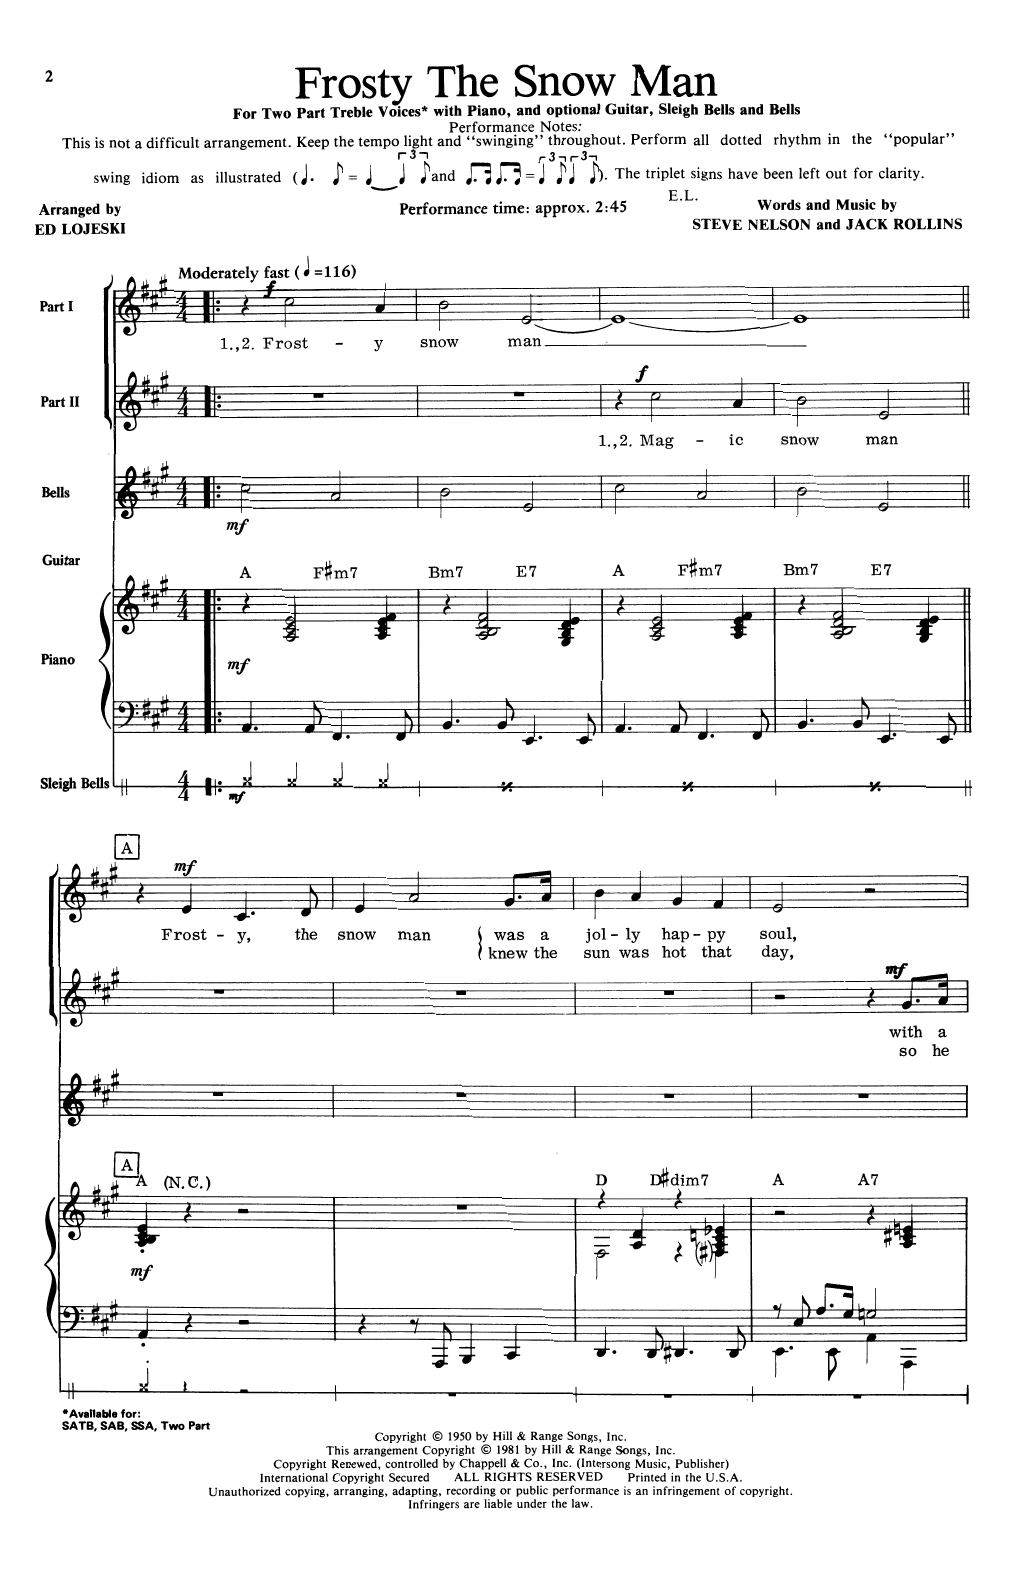 Jack Rollins & Steve Nelson Frosty The Snow Man (arr. Ed Lojeski) Sheet Music Notes & Chords for SATB Choir - Download or Print PDF